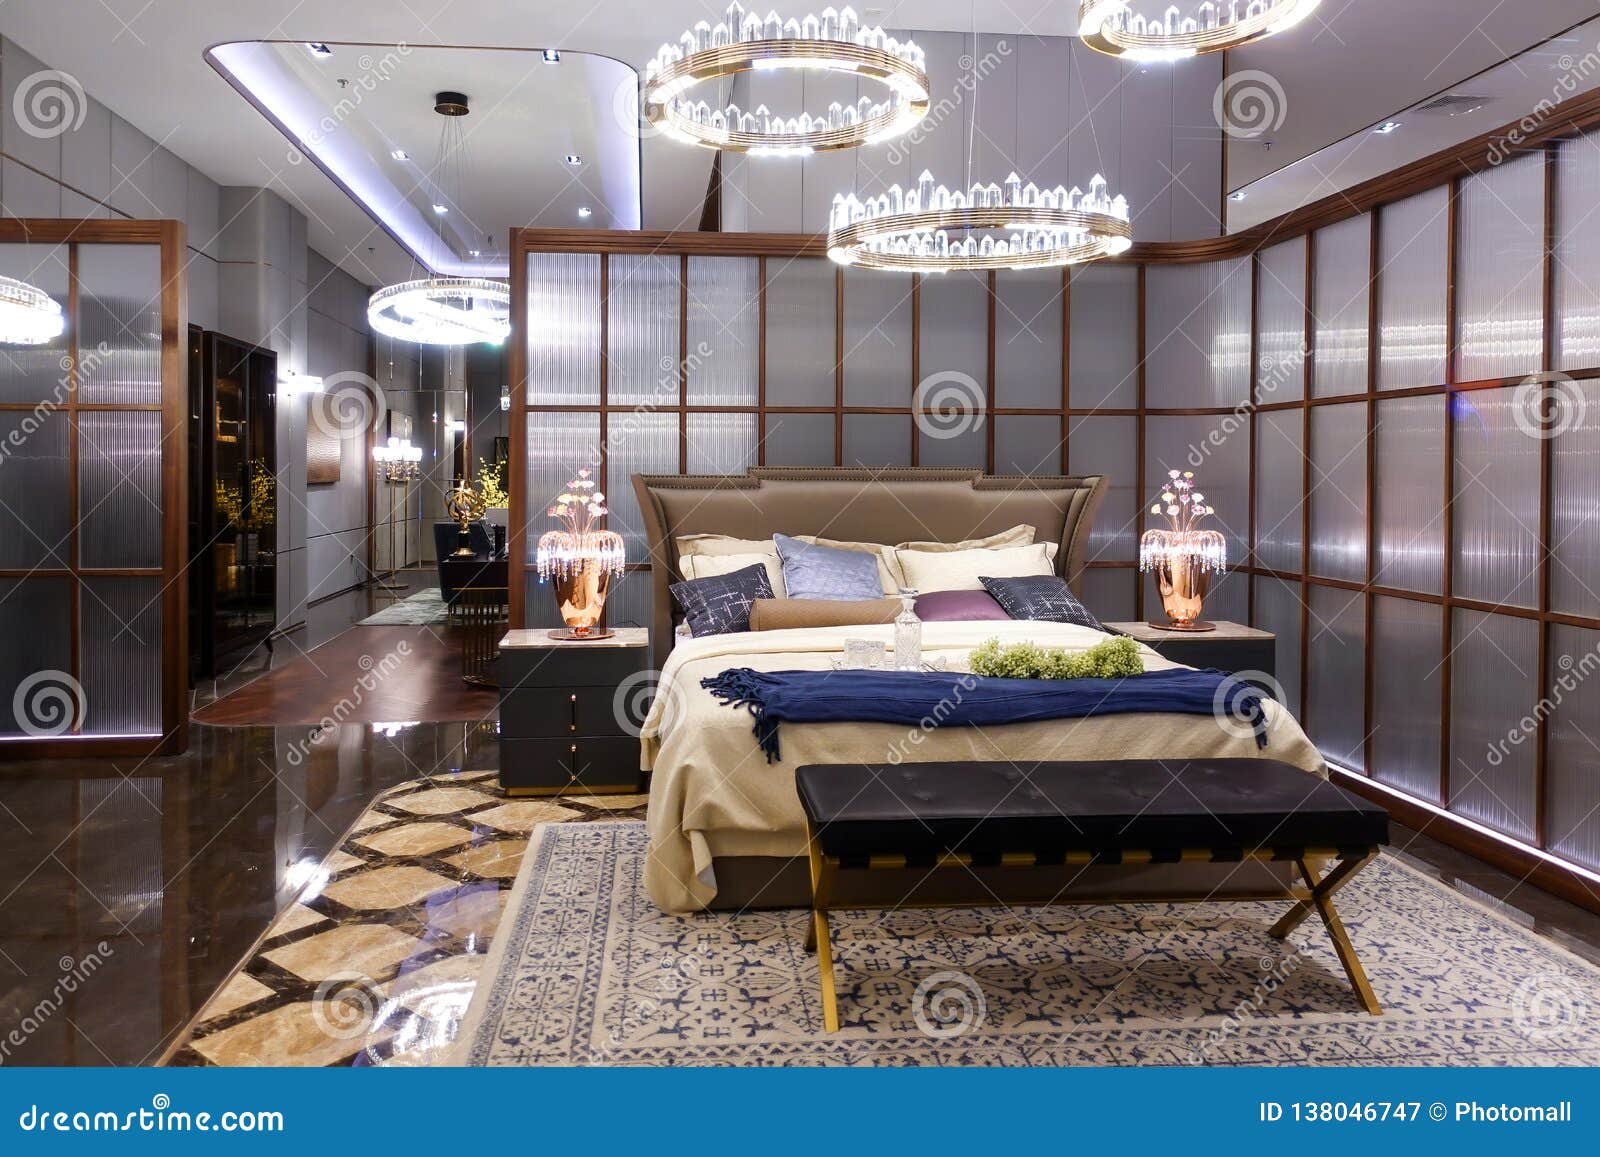 bedroom furniture in luxury hotel houseroom